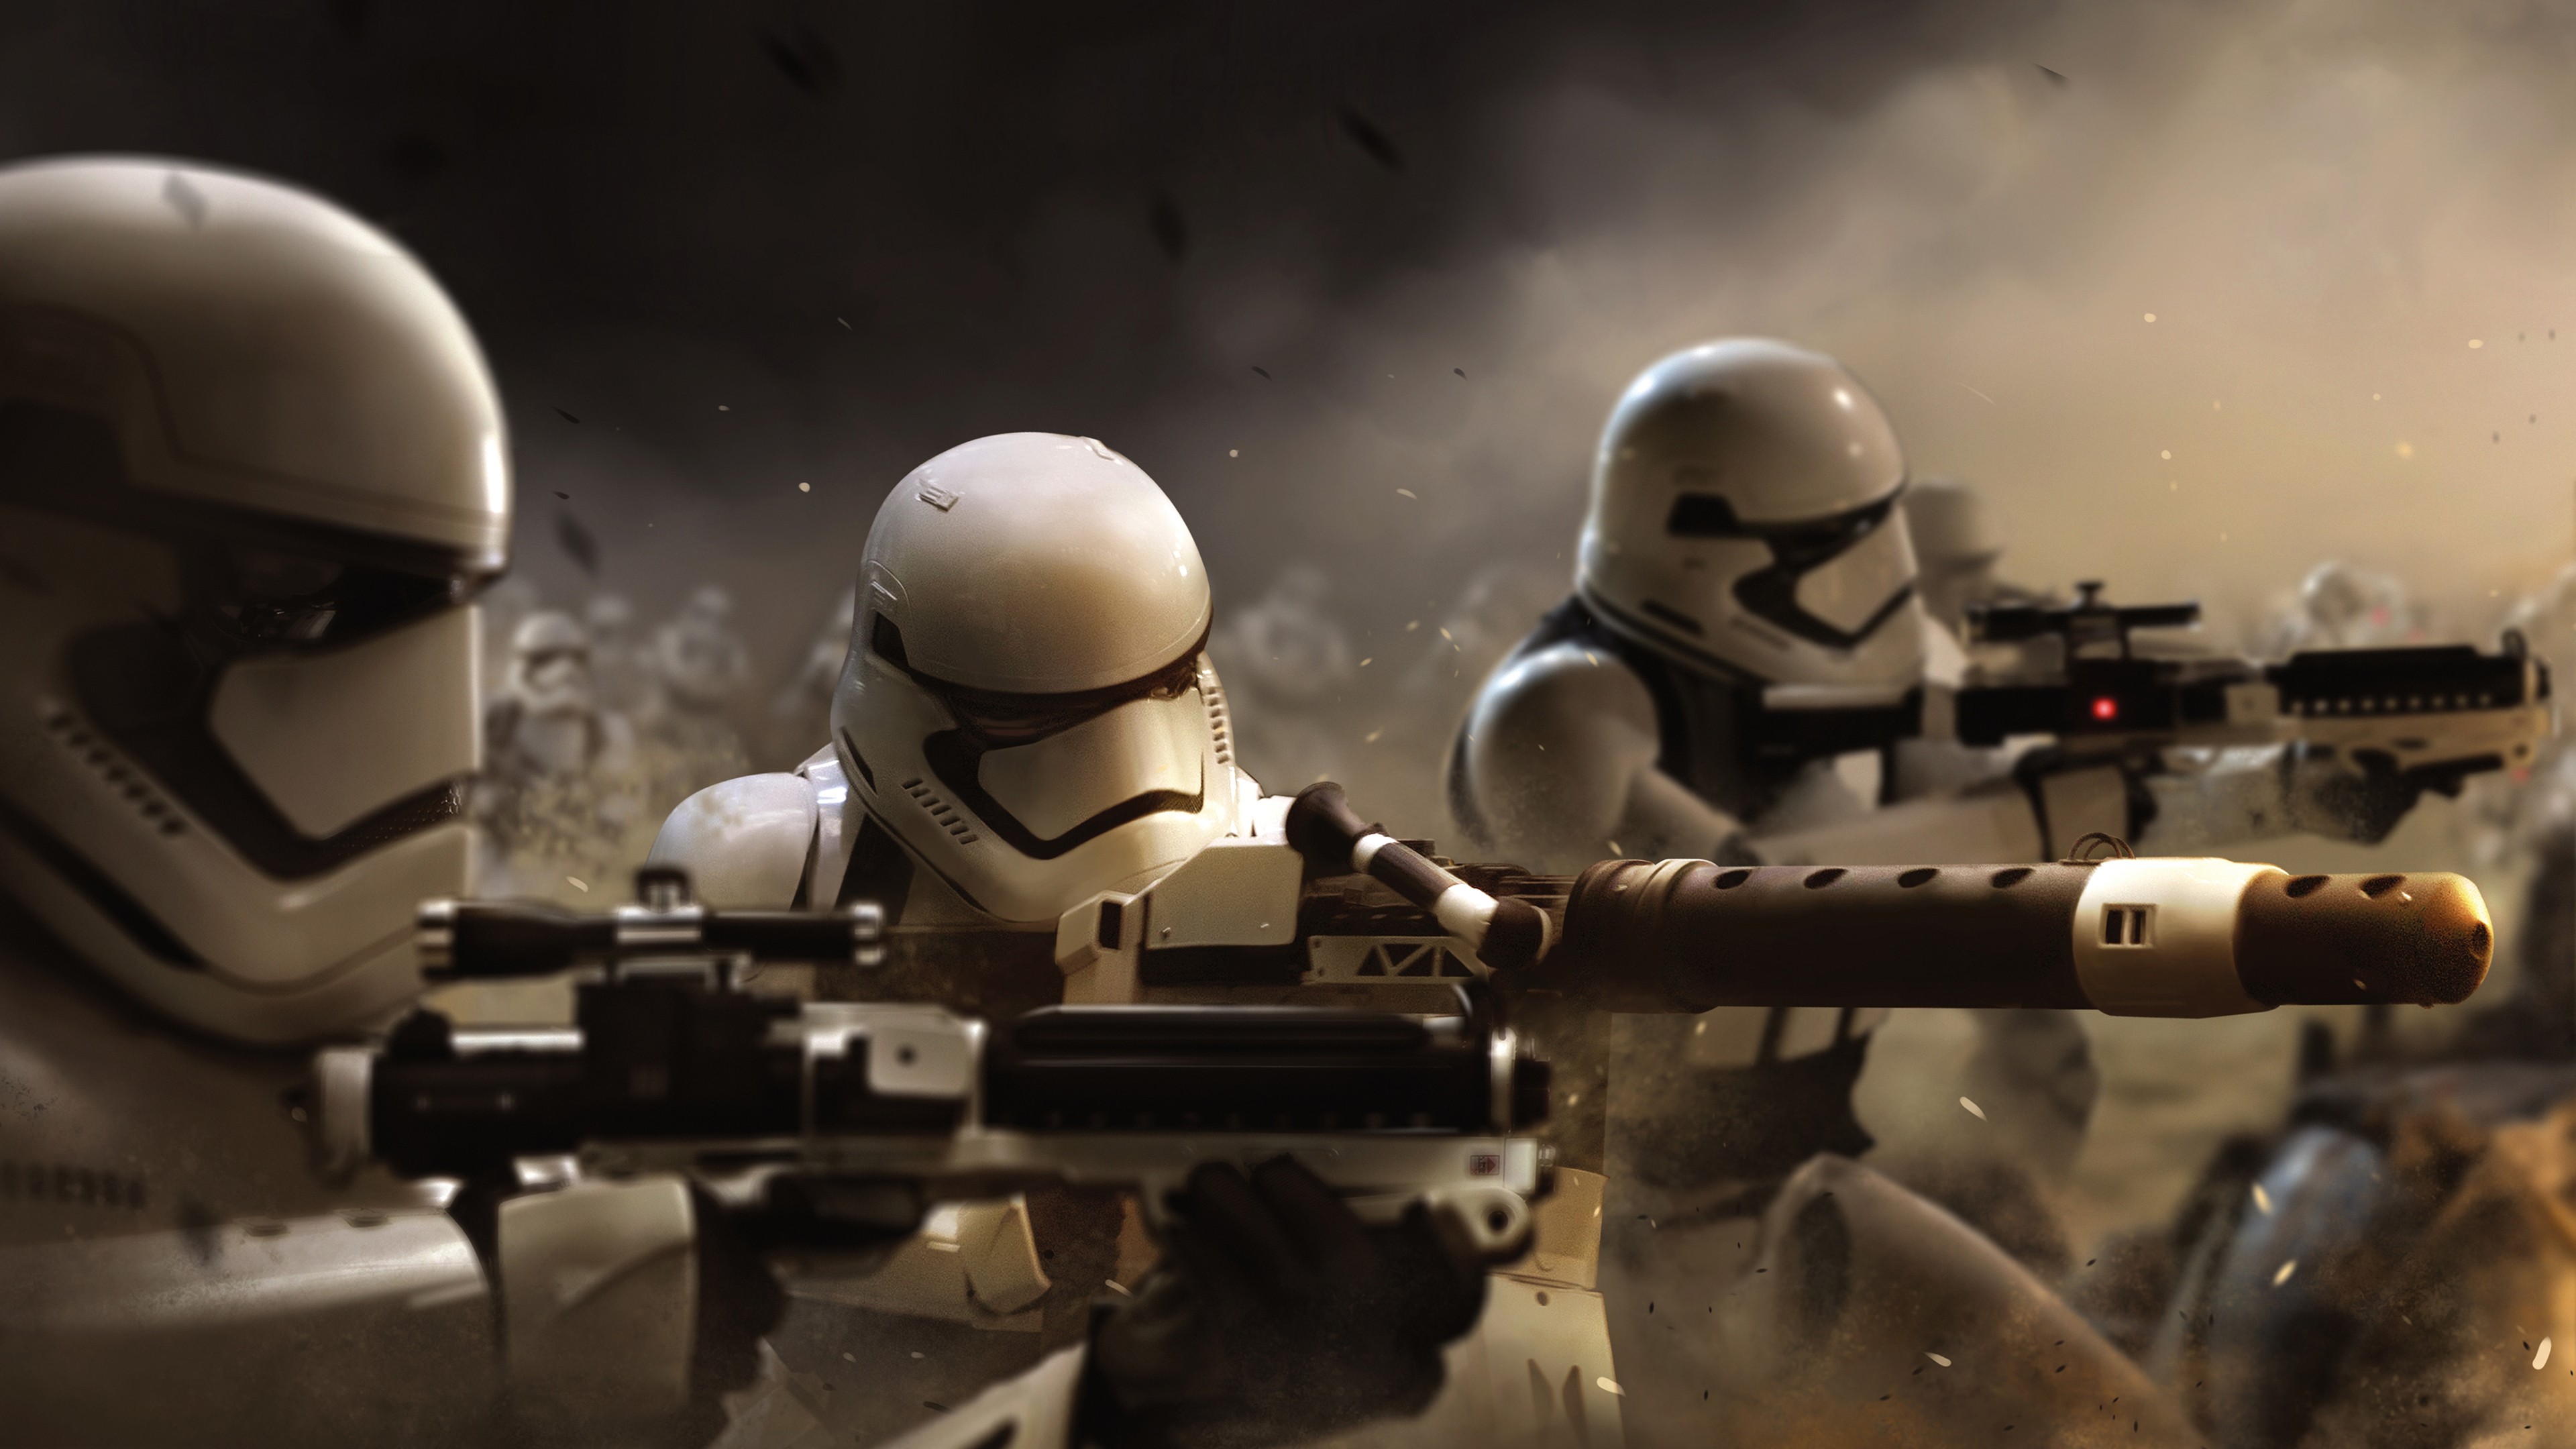 General 3840x2160 Star Wars: The Force Awakens stormtrooper battle Star Wars science fiction movies First Order Trooper digital art